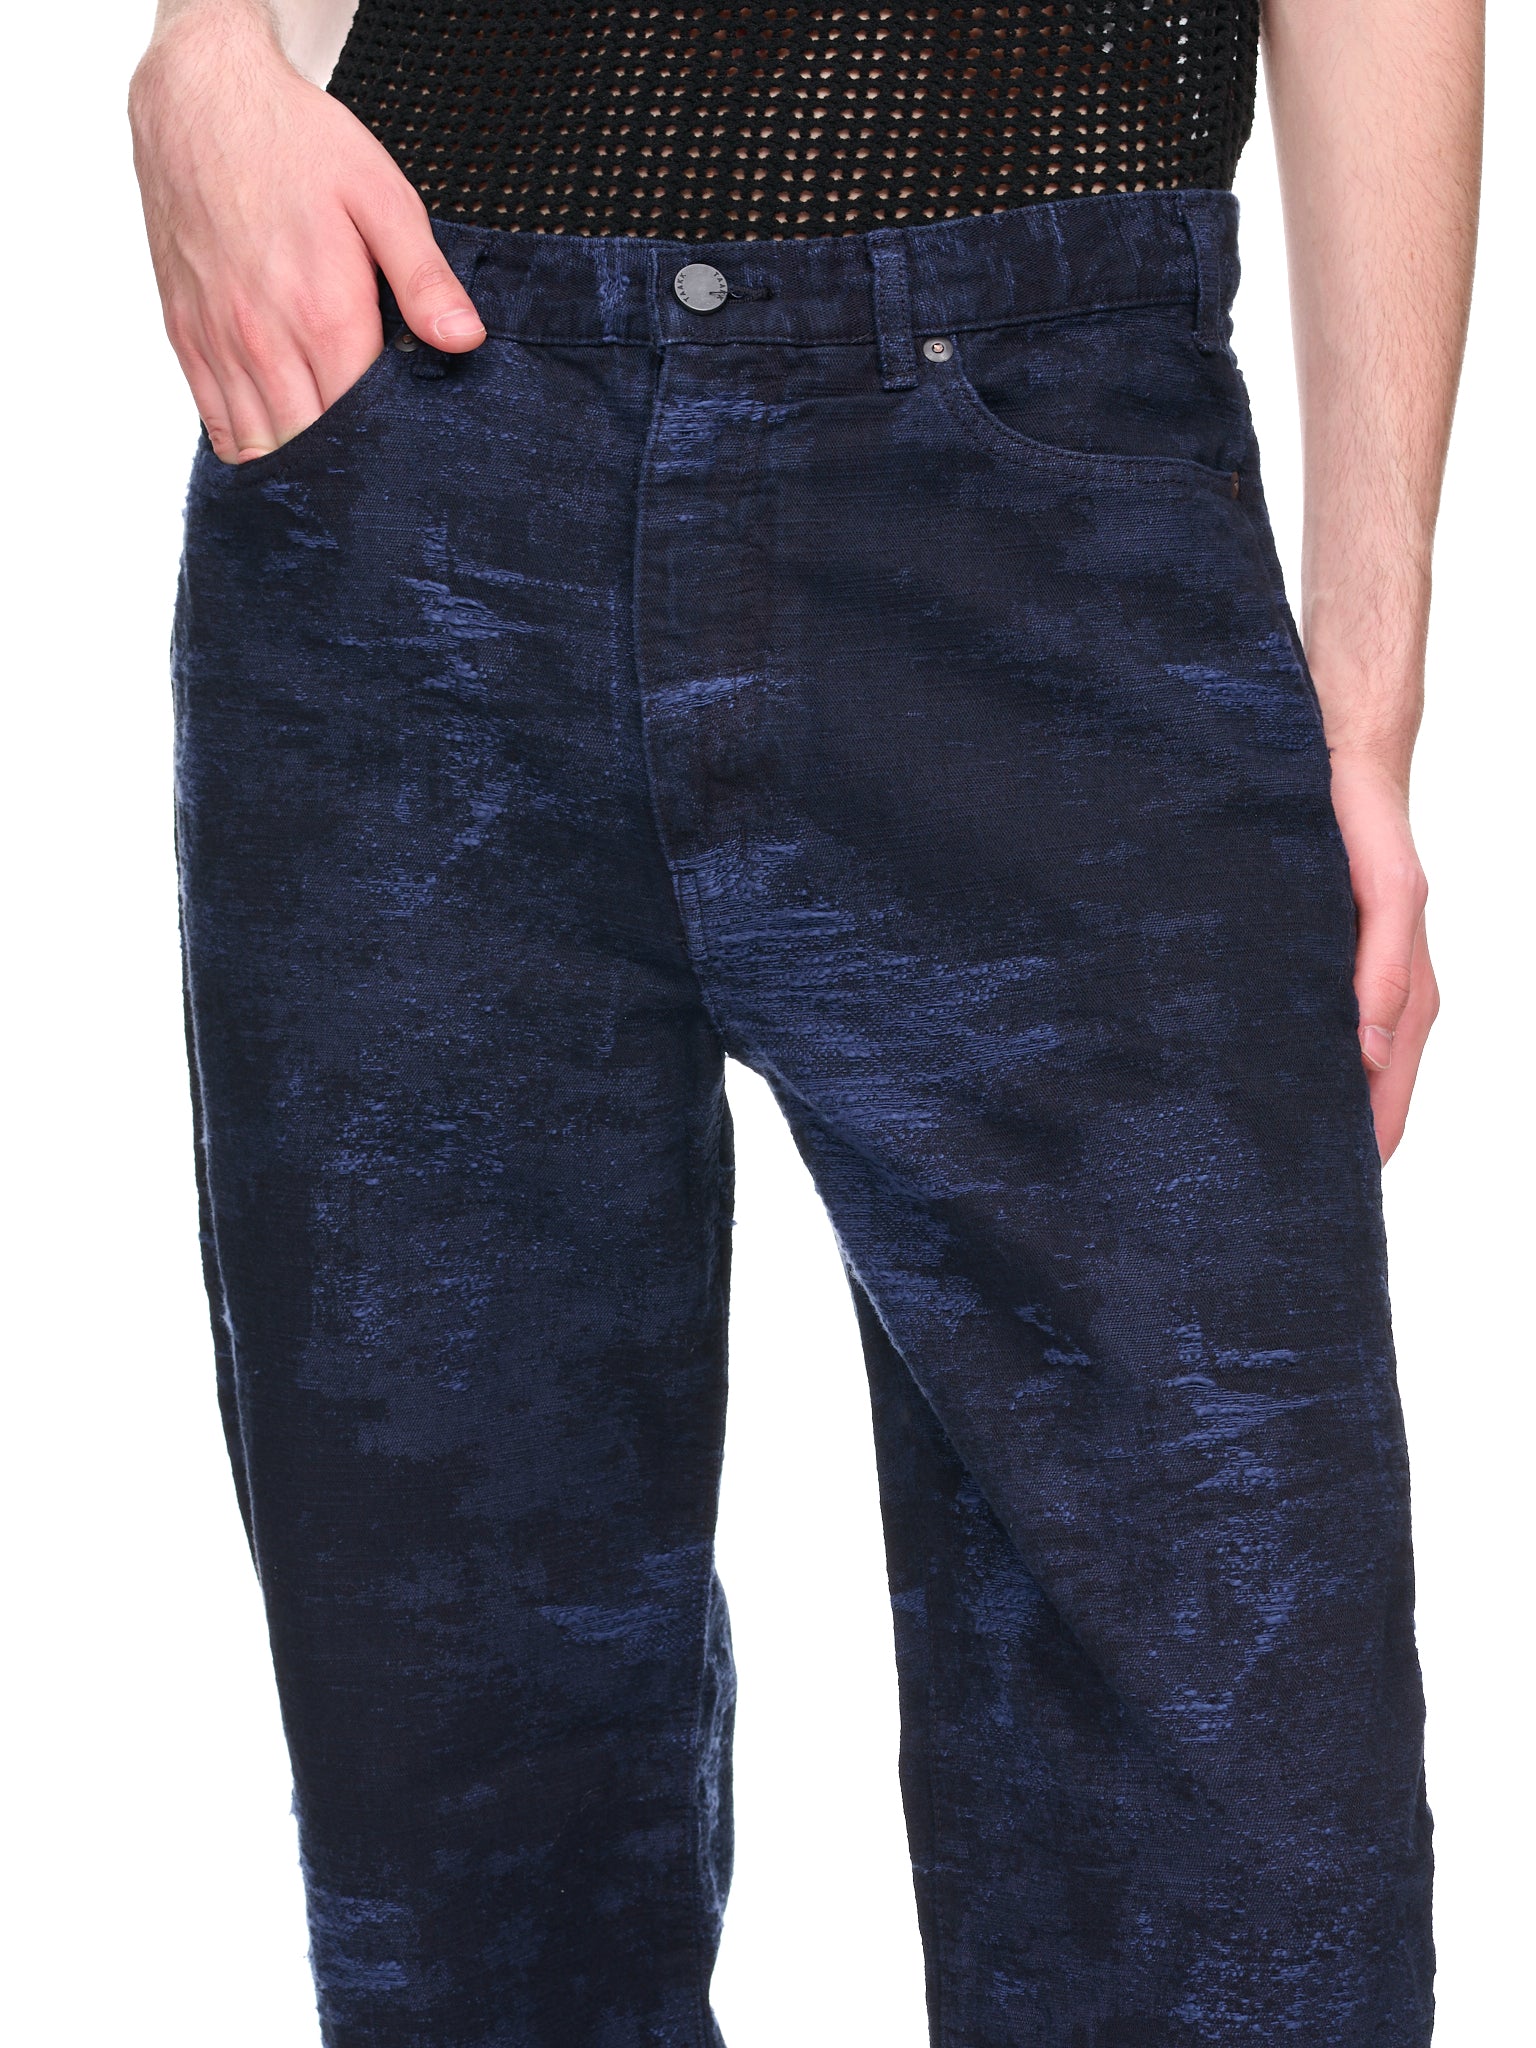 TAAKK Navy Jacquard Jeans